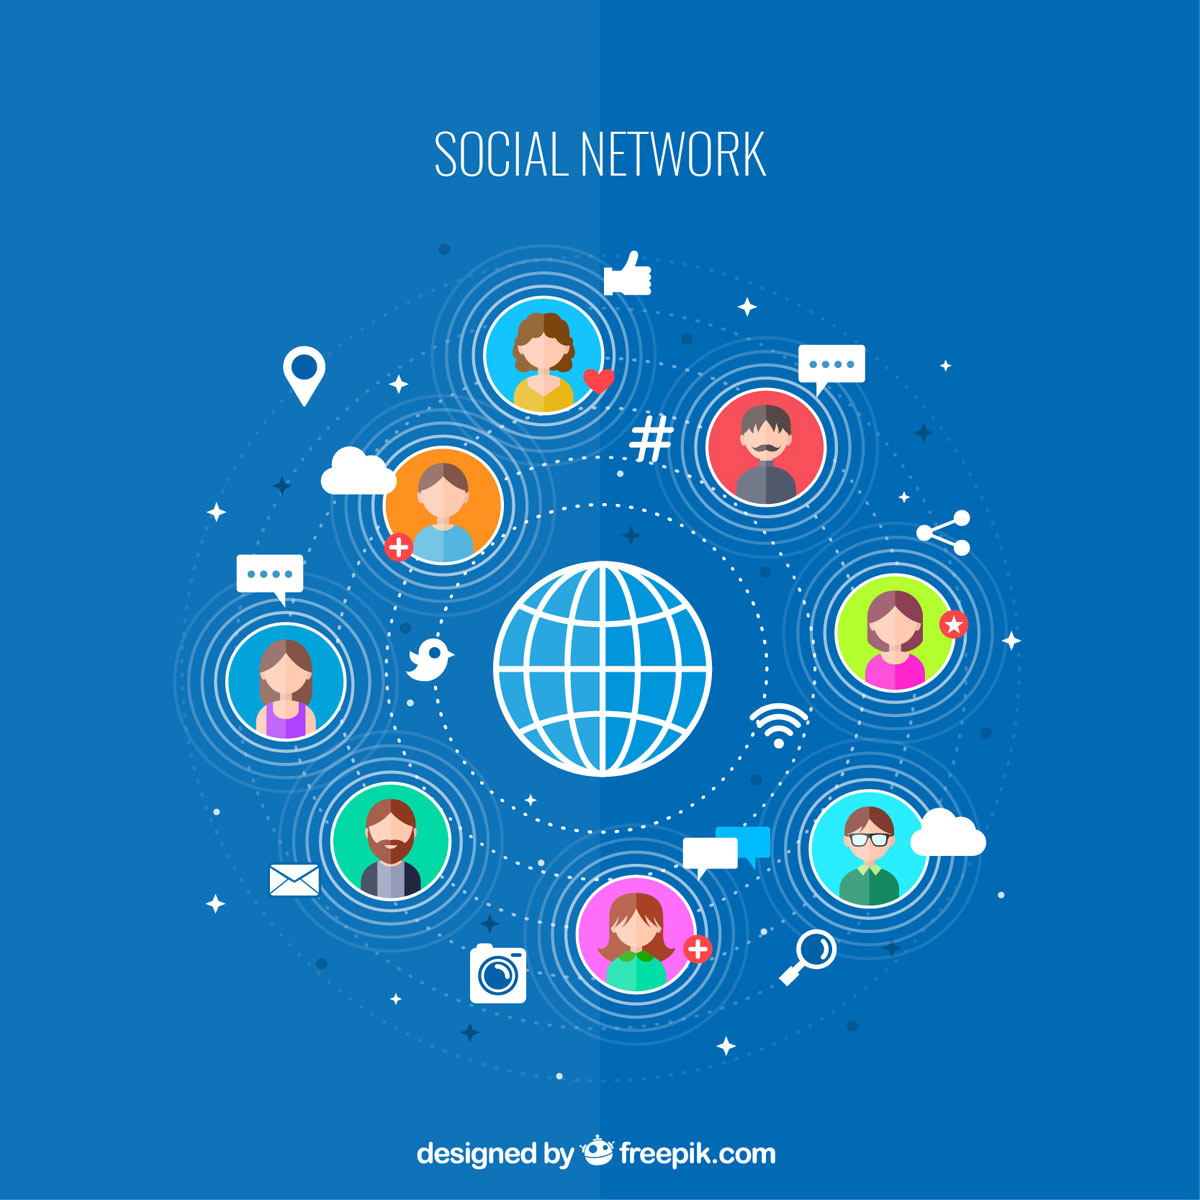 Social Netzwork by freepik.com